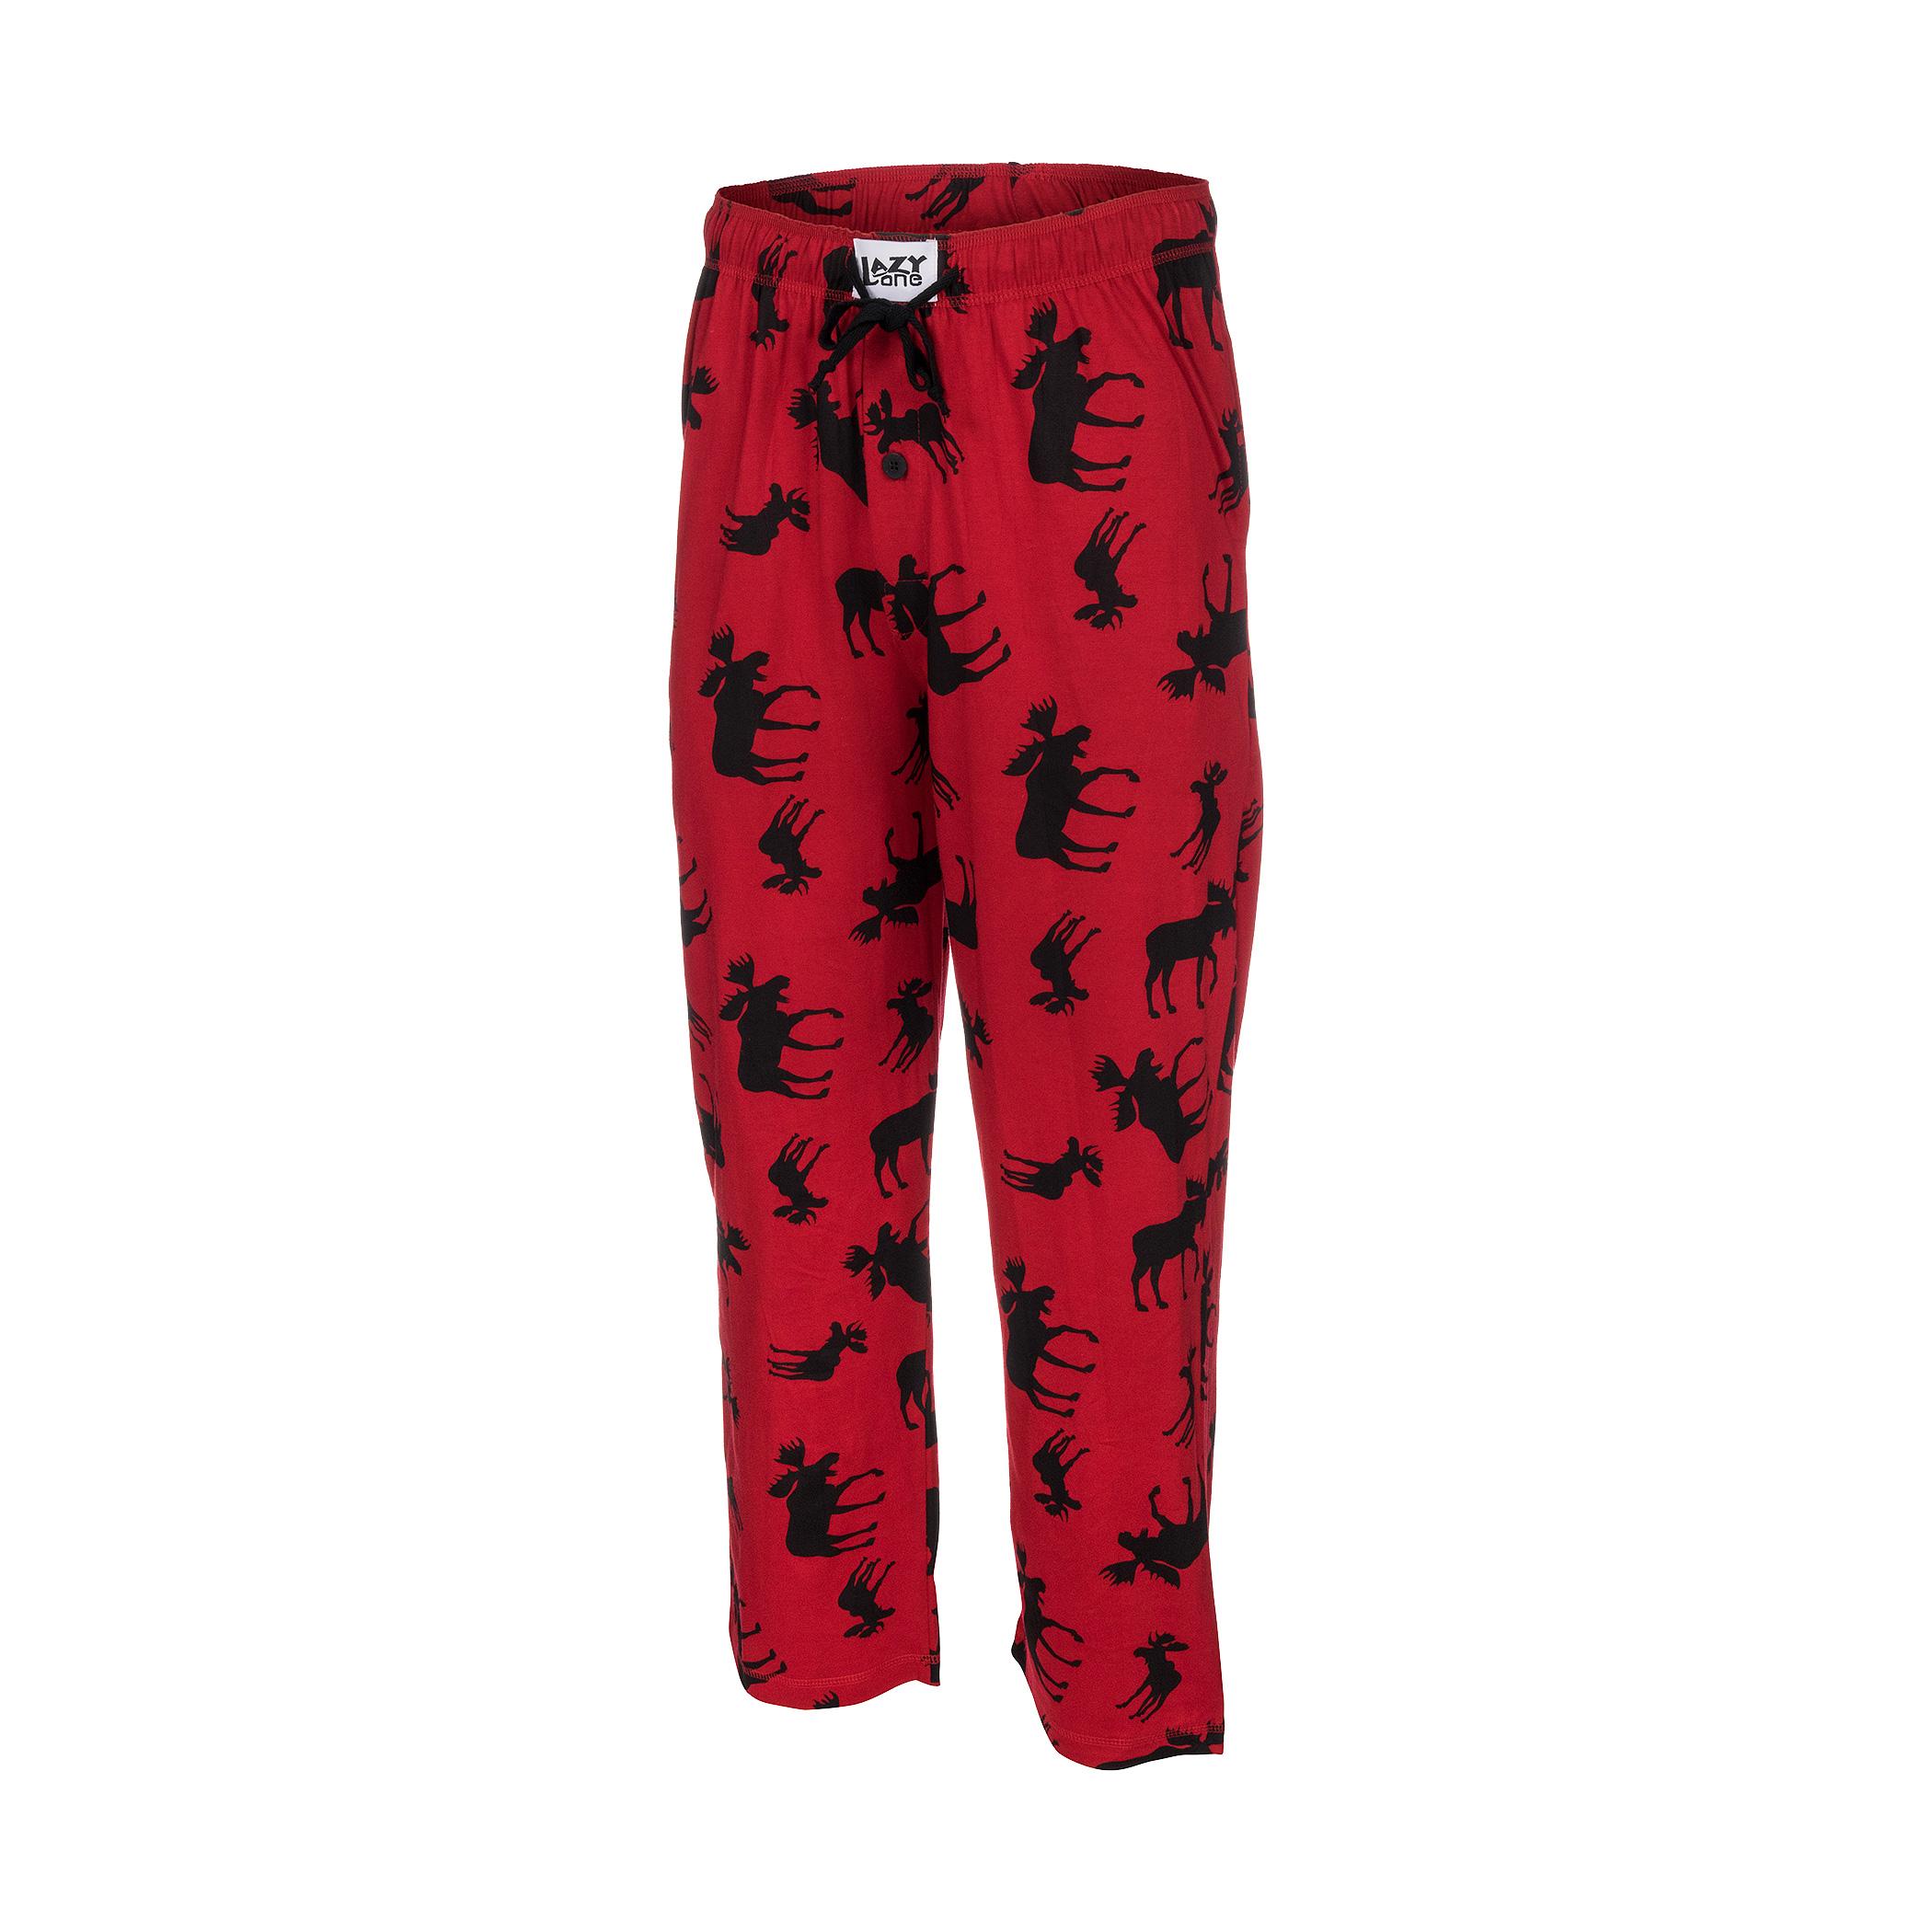 Moose Plaid Red Men's Pajama Set by LazyOne